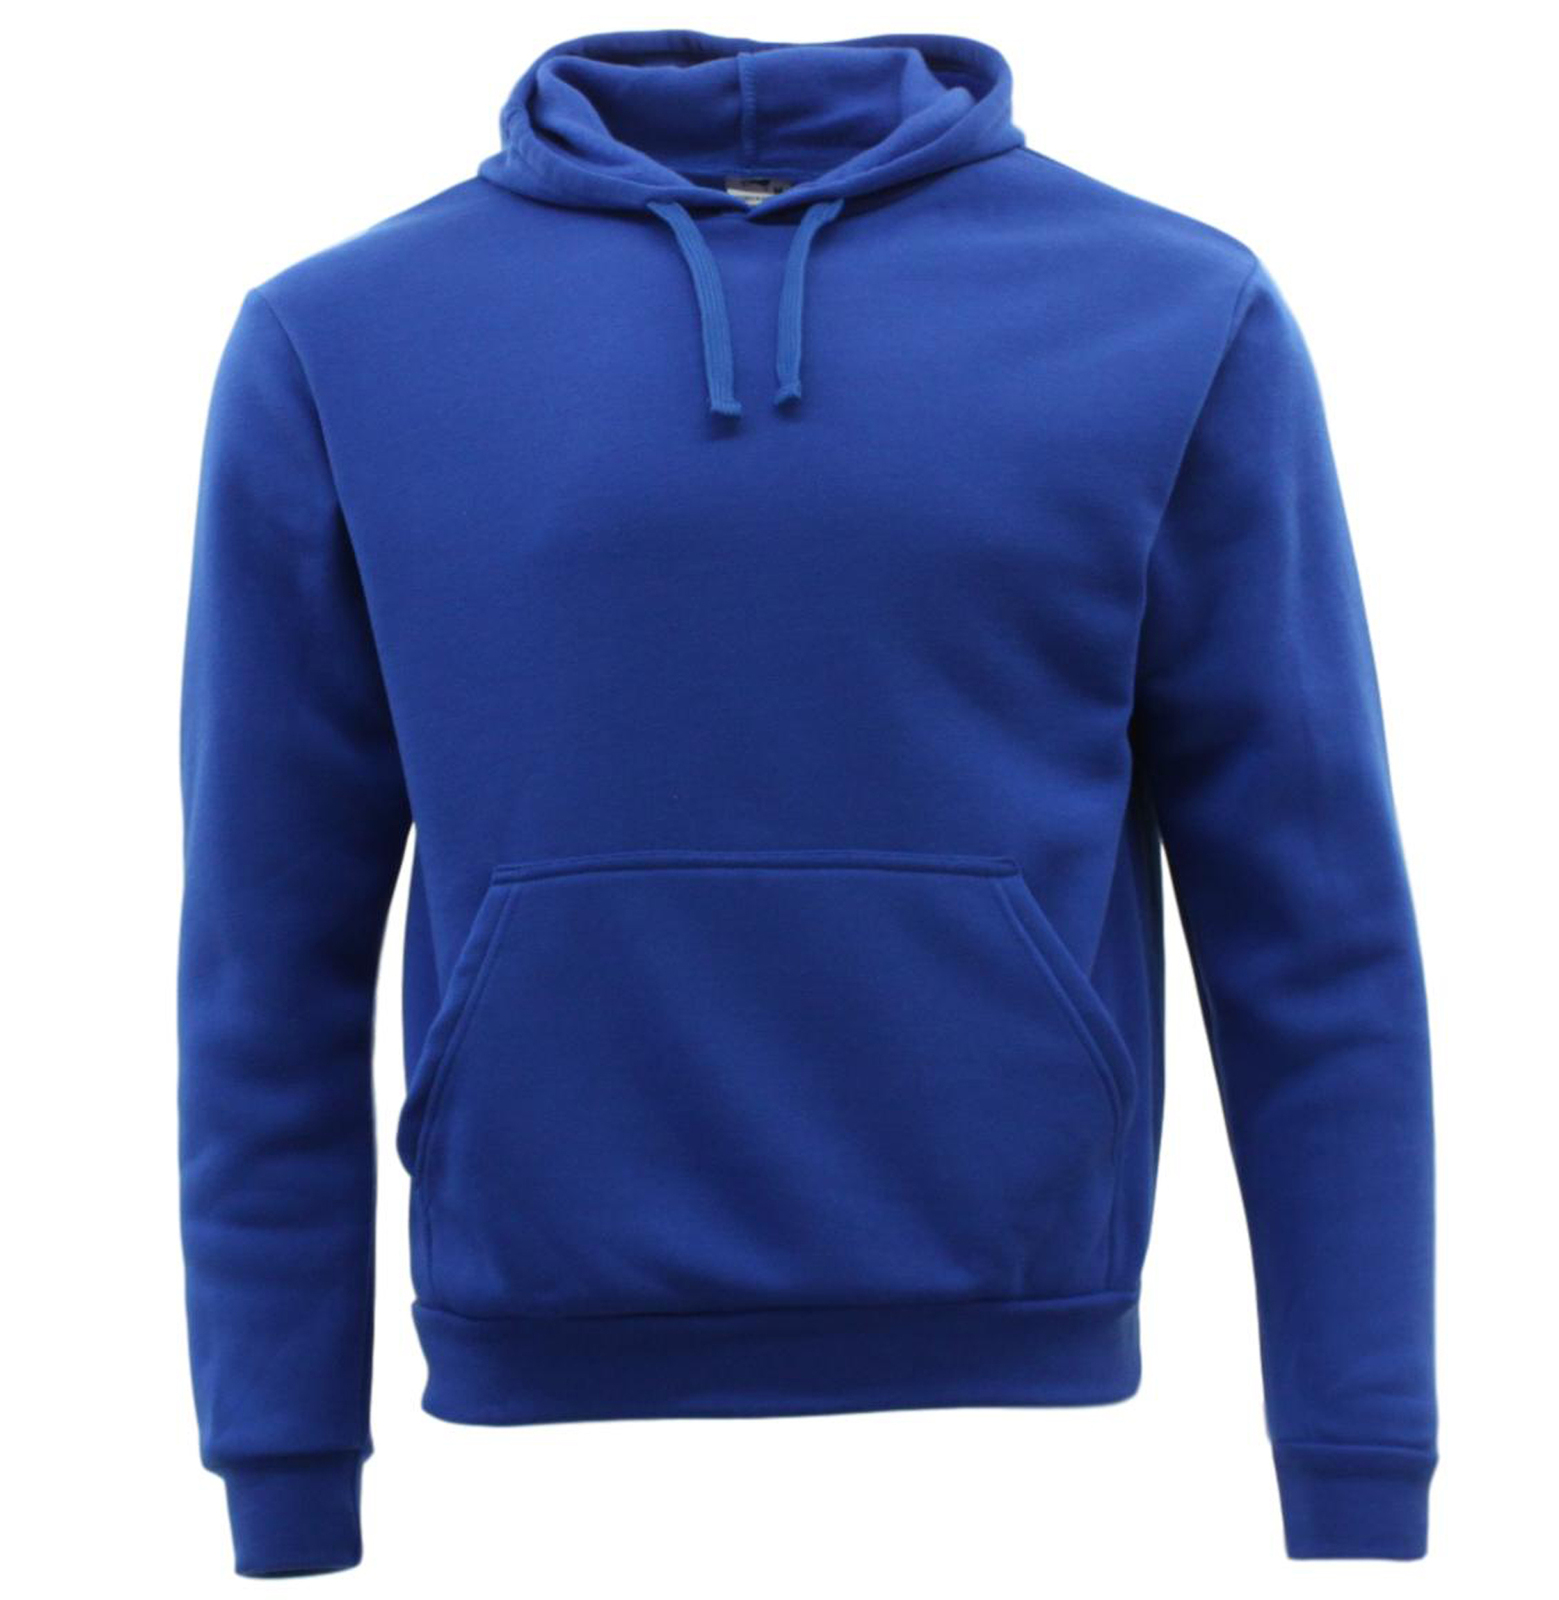 Adult Unisex Men's Basic Plain Hoodie Pullover Sweater Sweatshirt Jumper  XS-8XL